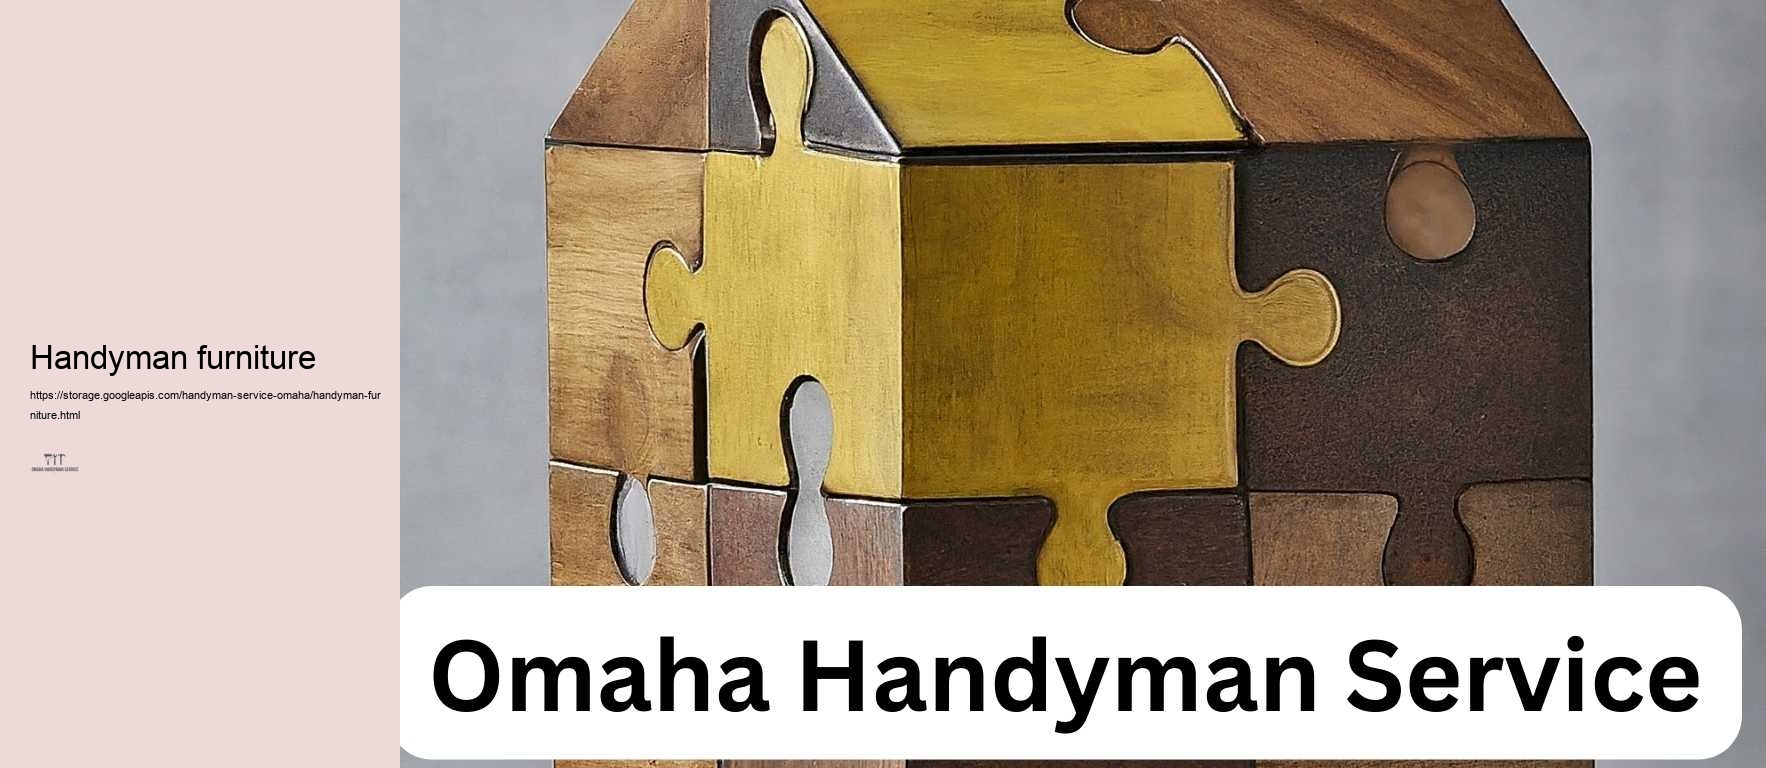 Handyman furniture